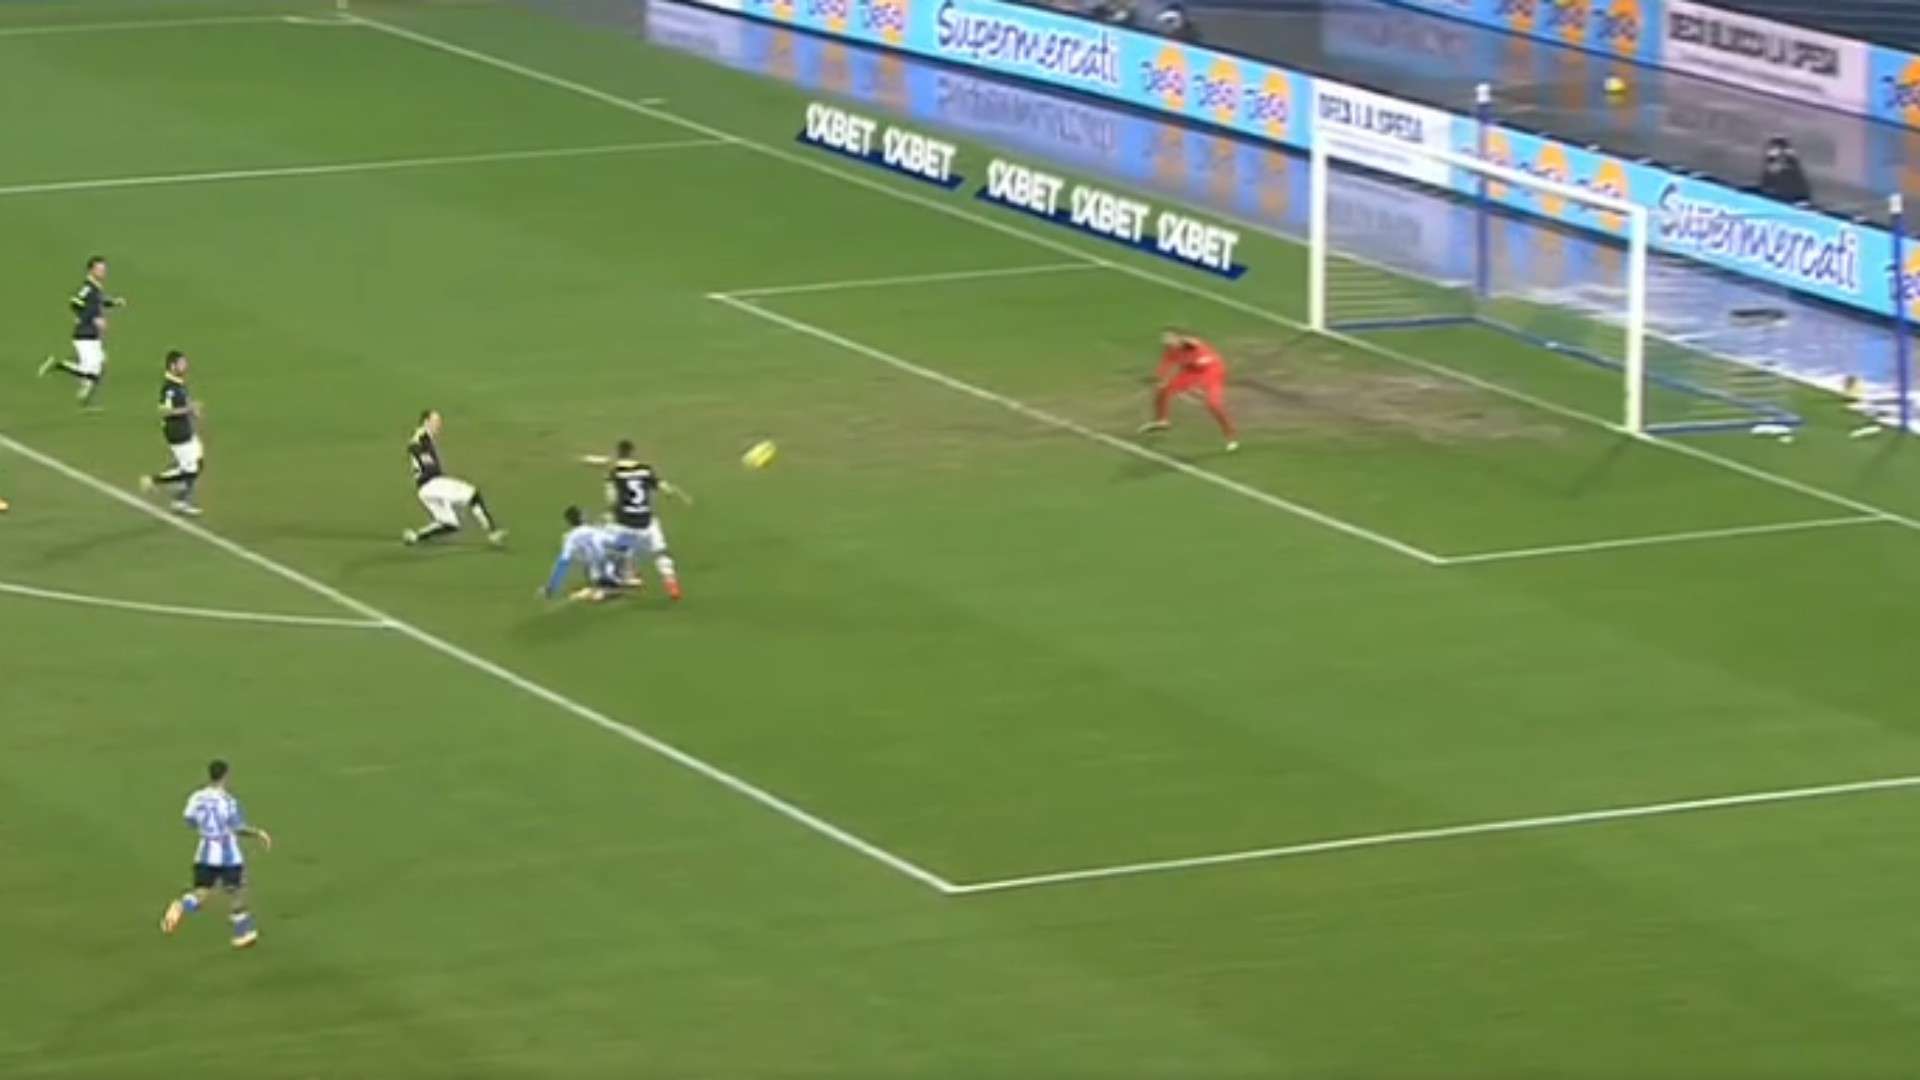 Gol anulado Hirving Lozano vs Spezia